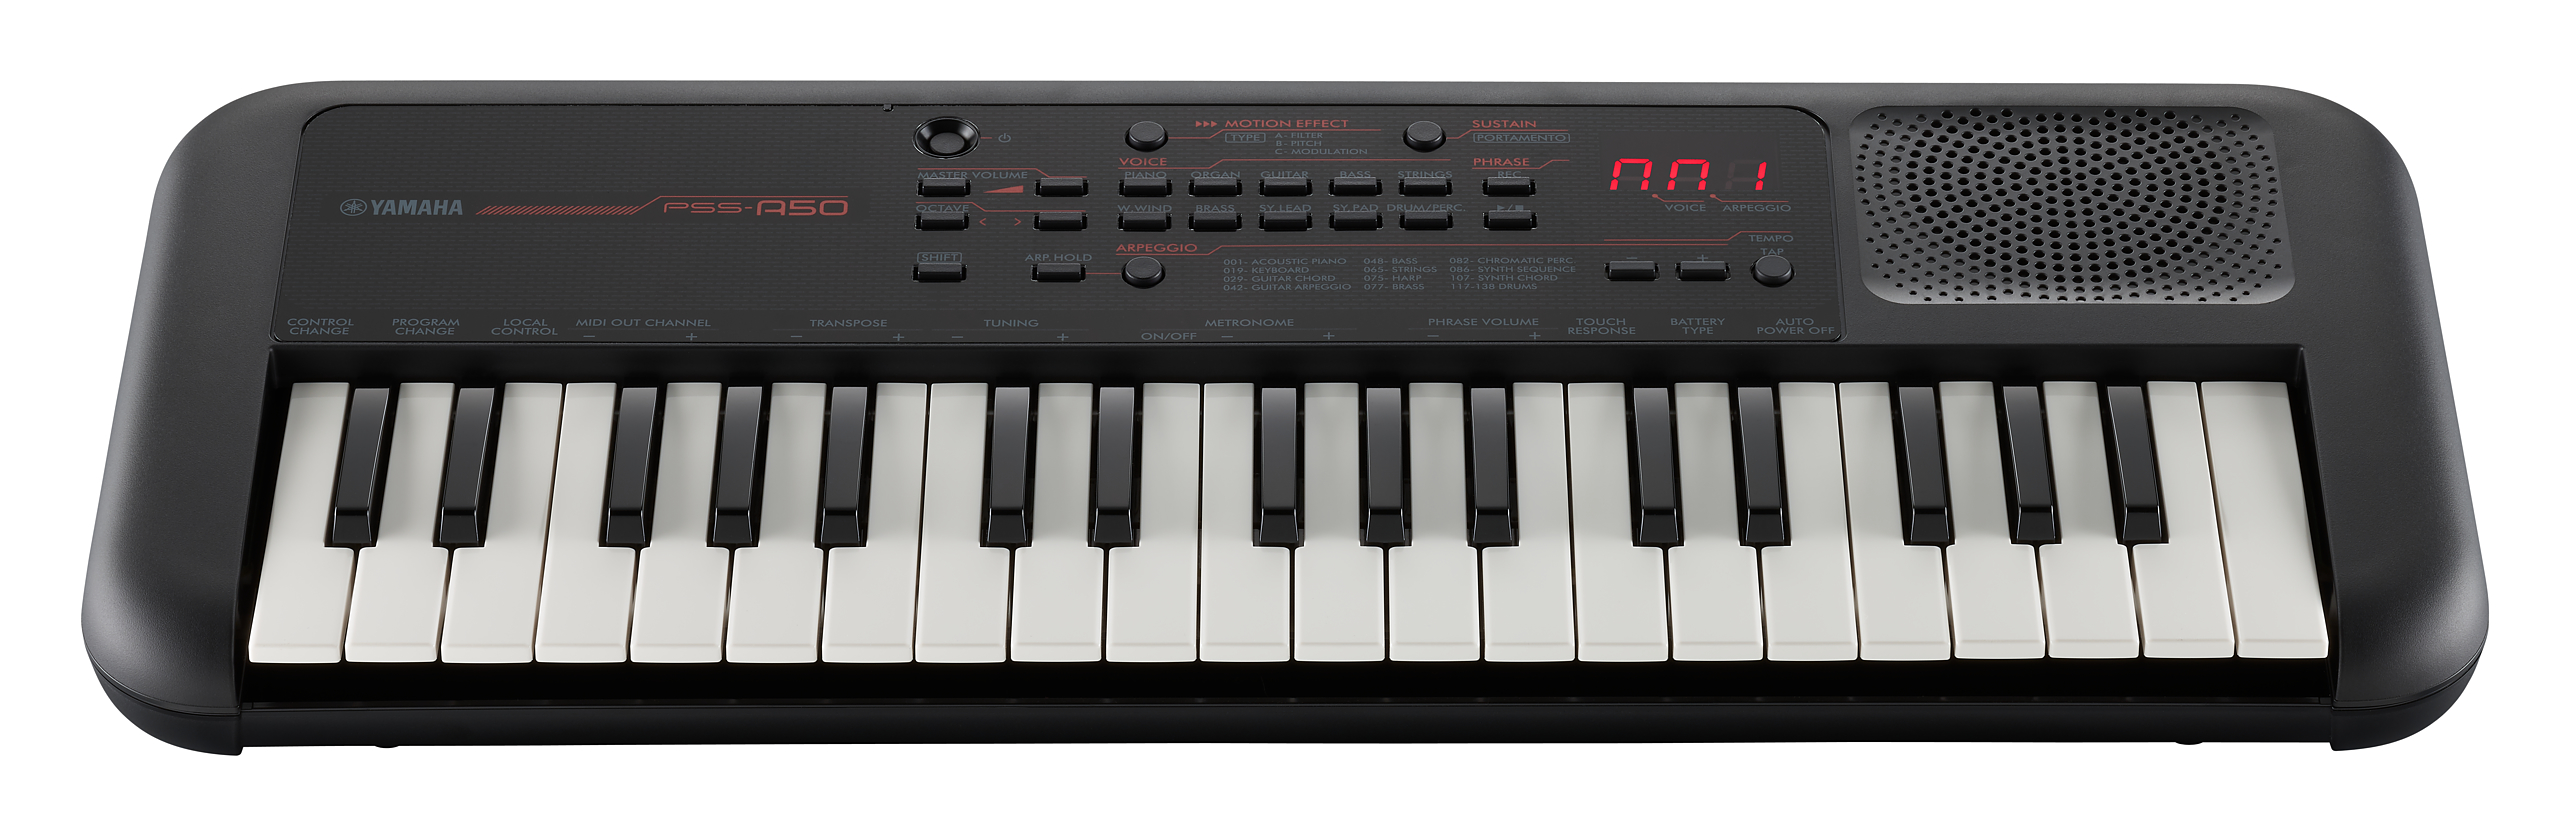 Yamaha Pss-a50 - Entertainer Keyboard - Variation 1